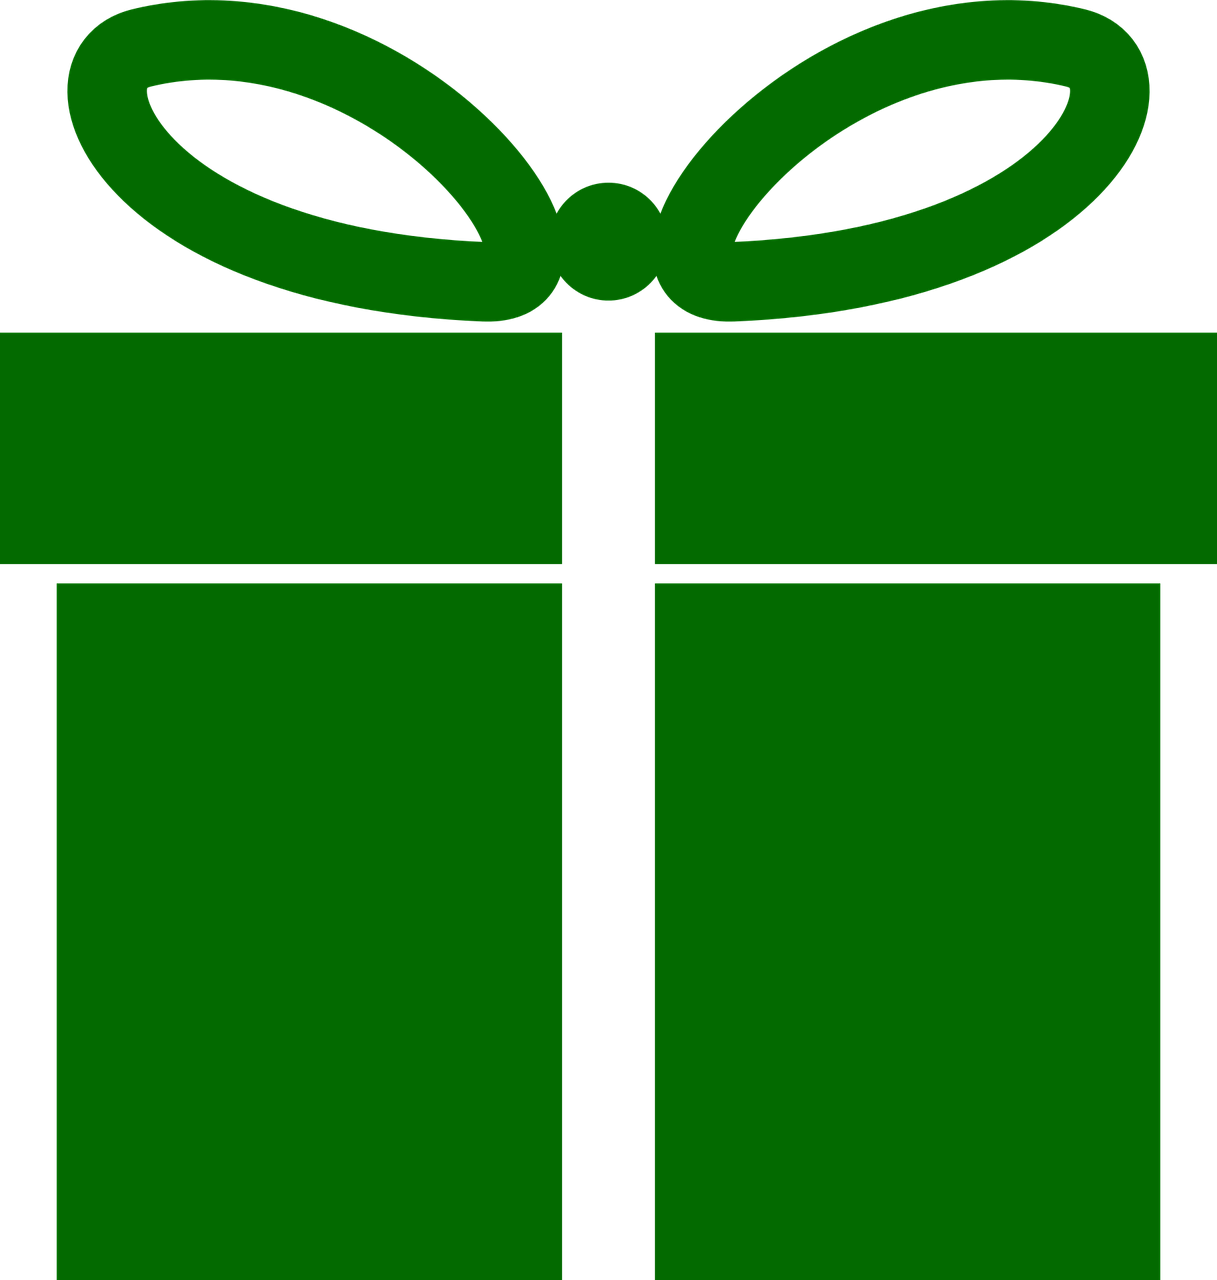 Fichier PNG de cadeau de Noël vert